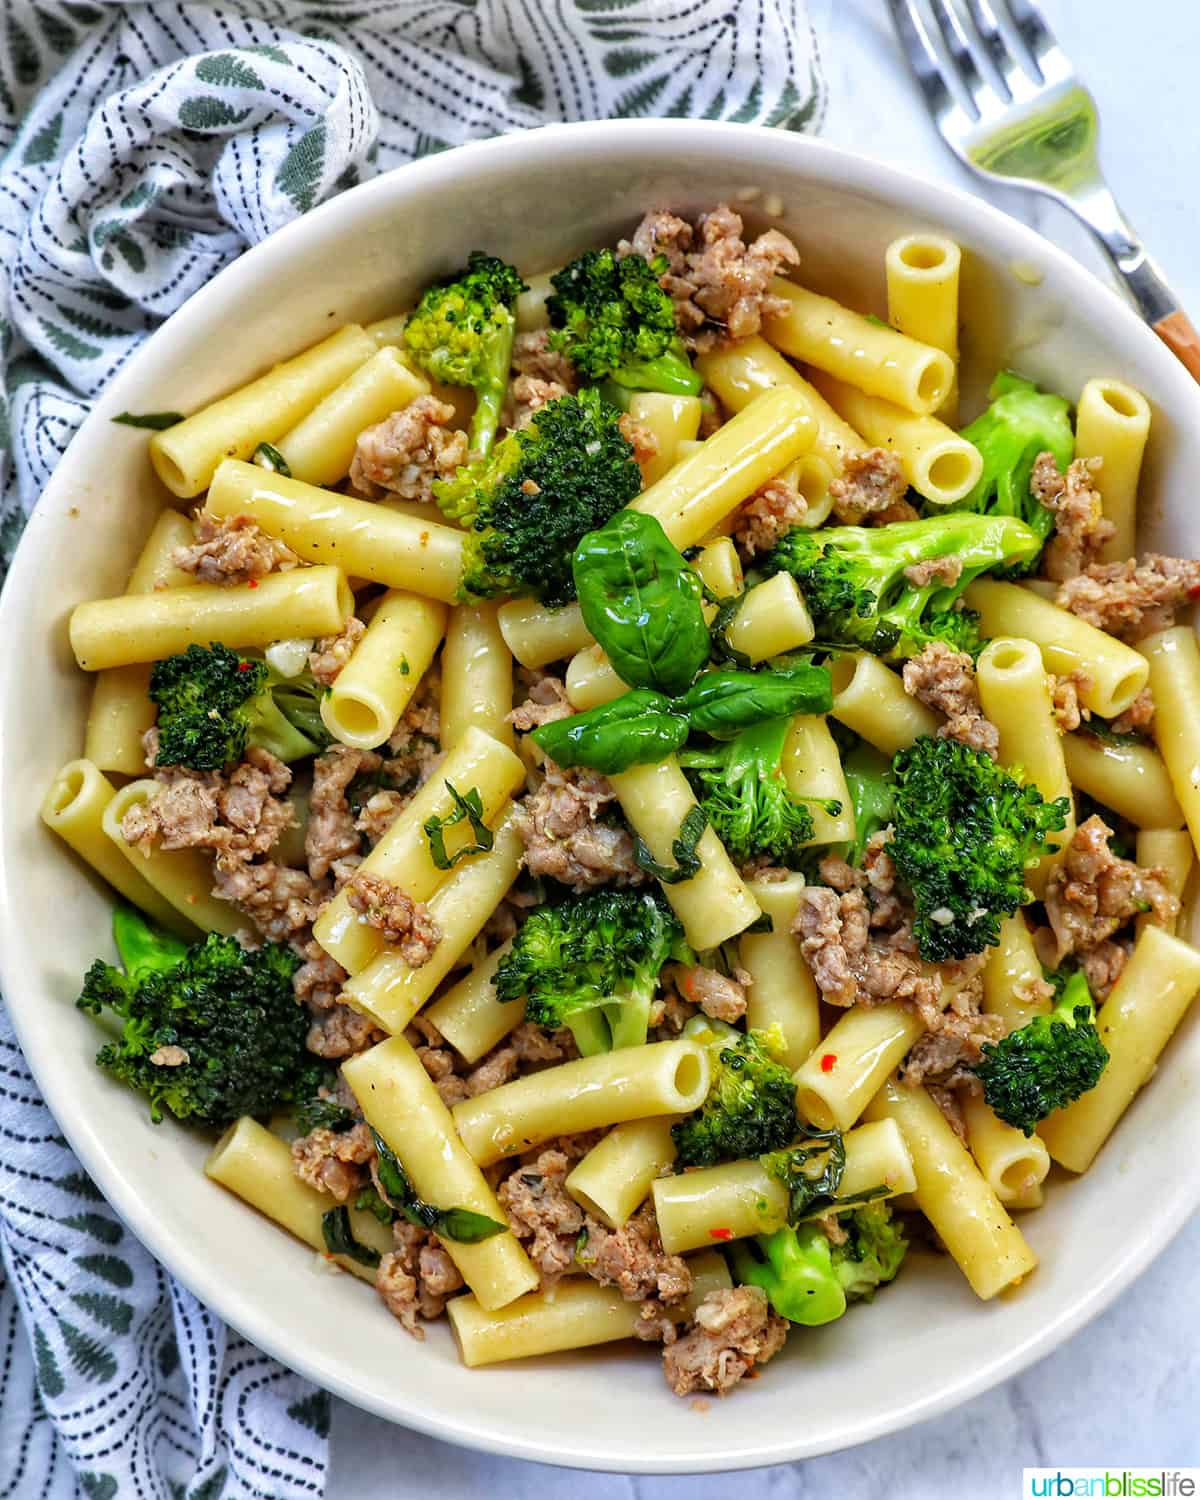 big bowl of ziti pasta with Italian sausage and broccoli.